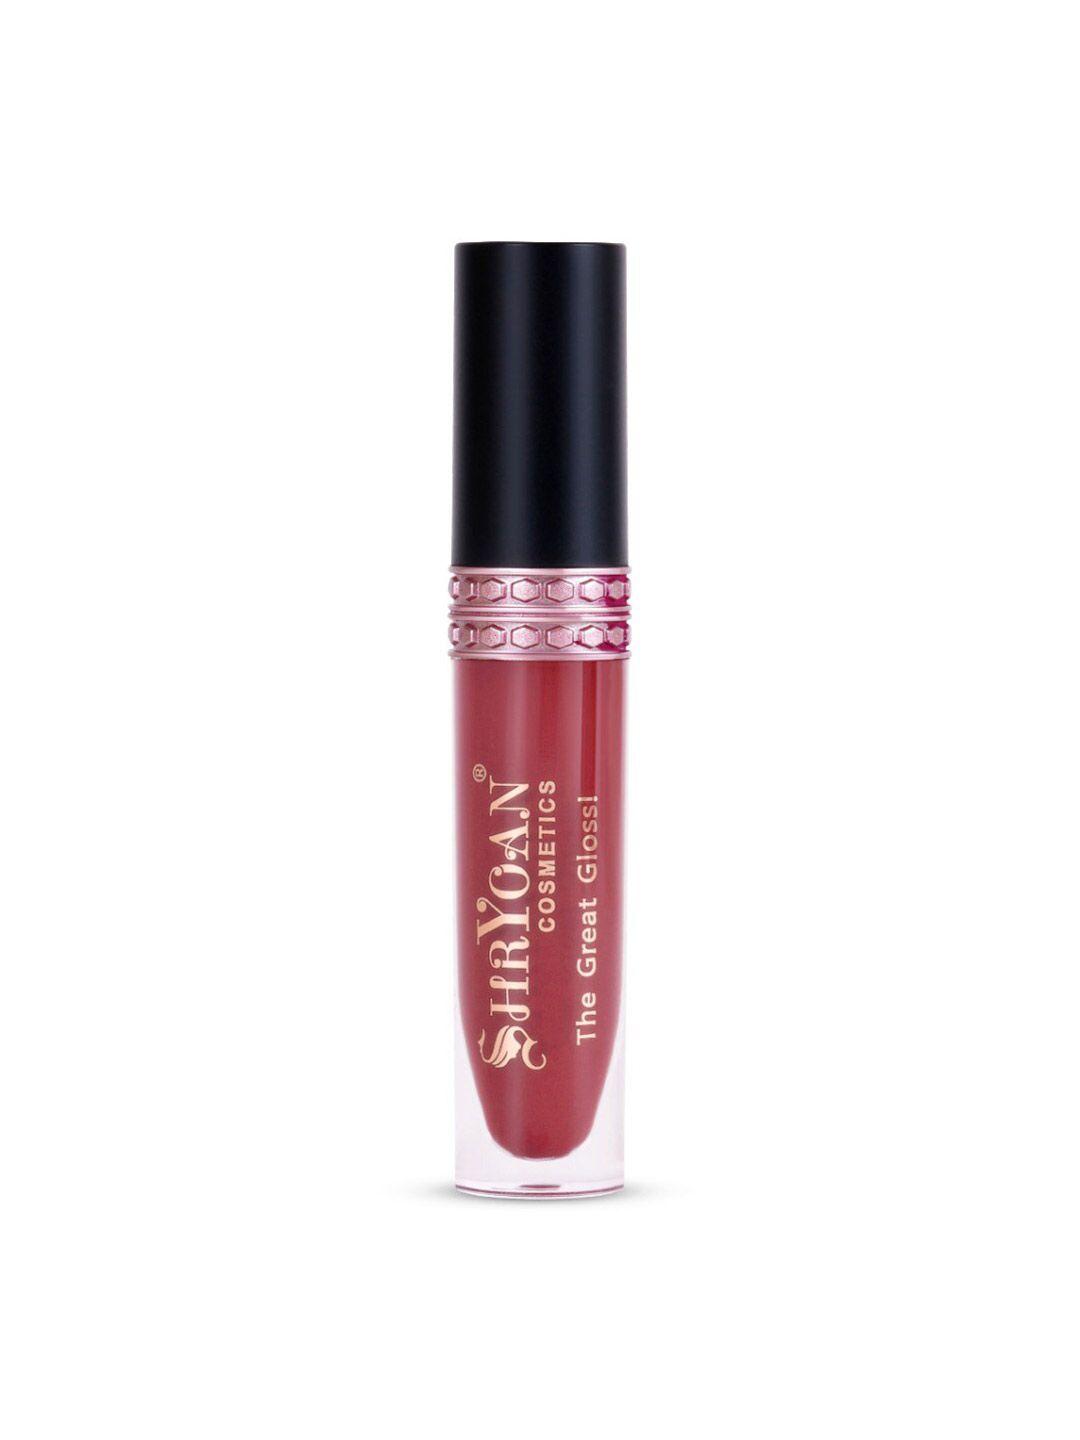 shryoan juicy jelly high shine non stick lightweight lip gloss - 6ml - shade 09